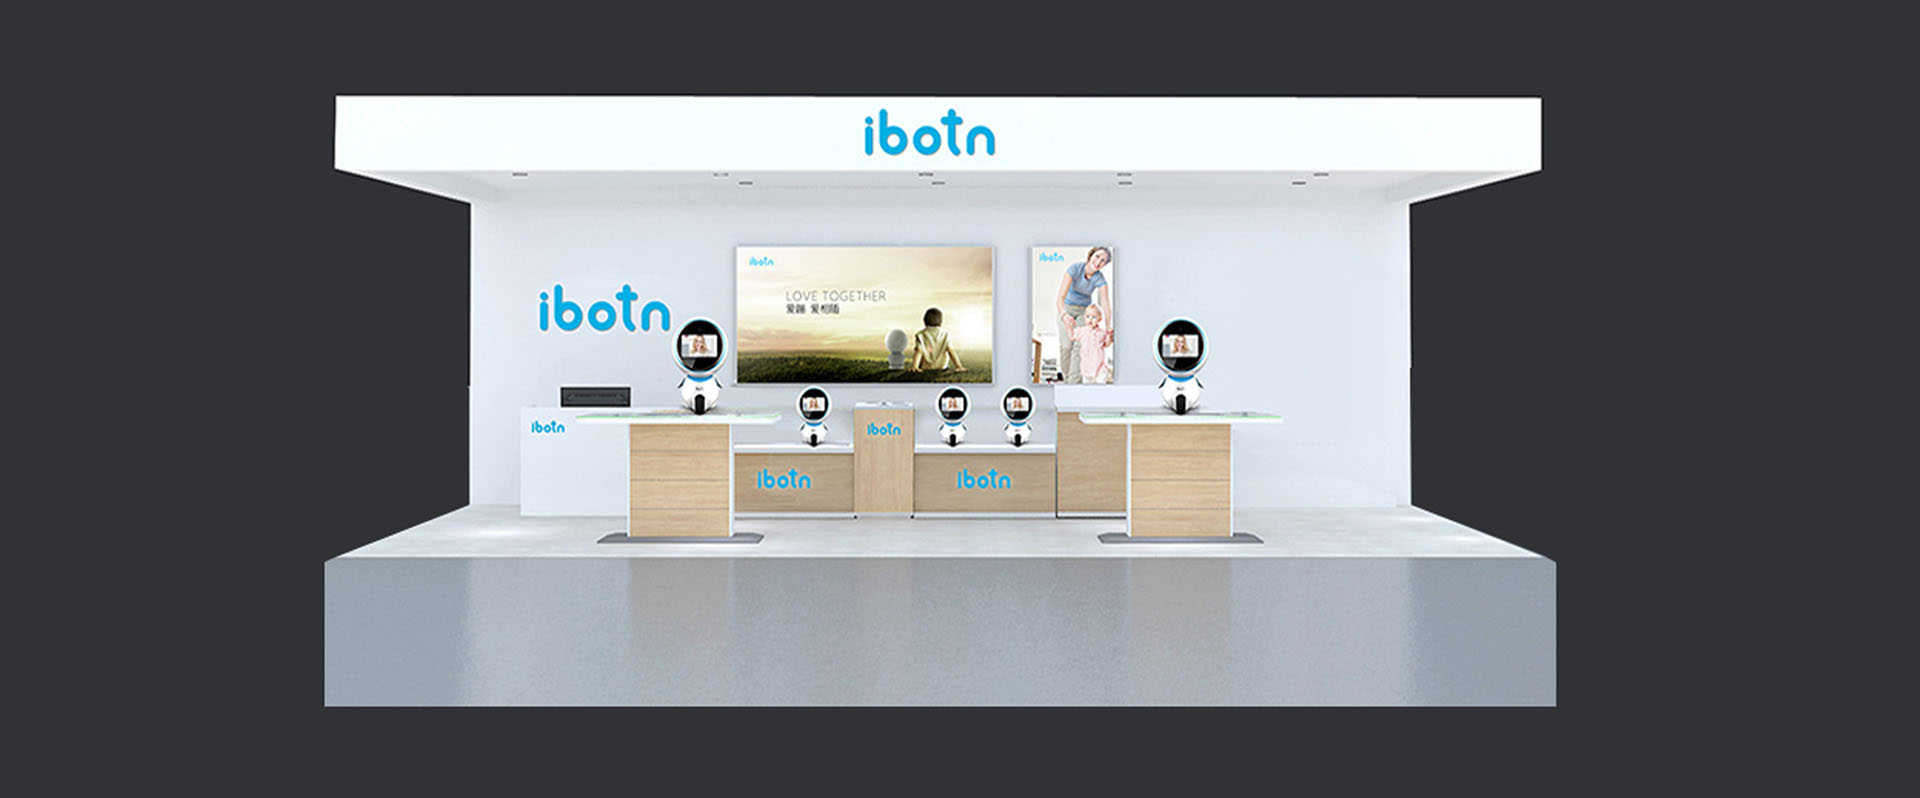 IBOTN爱蹦机器人品牌全案策划设计作品案例